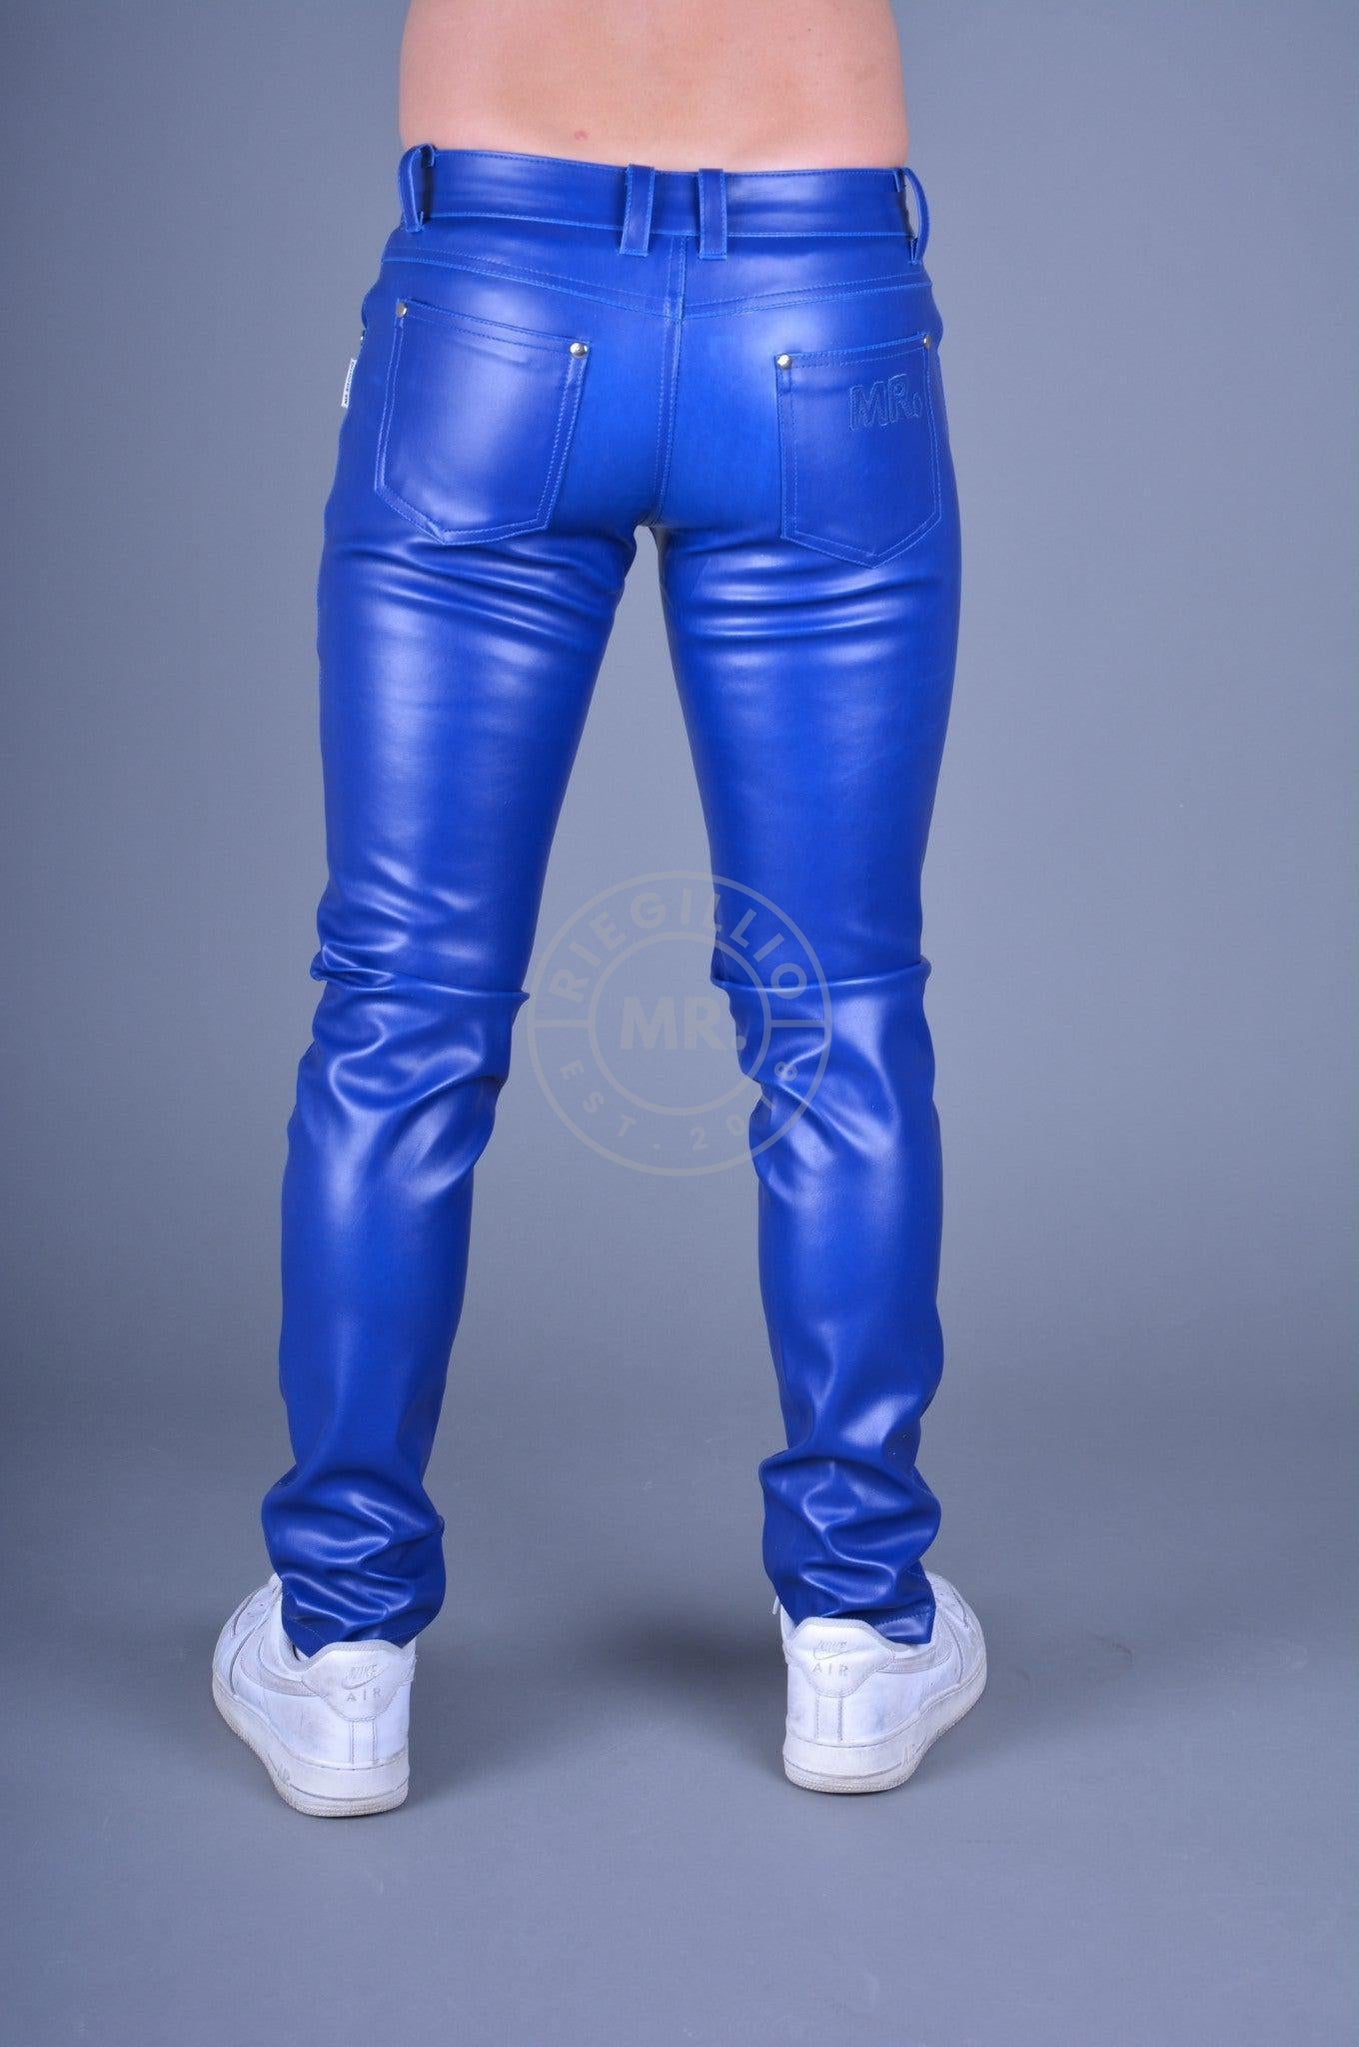 MR. 5-Pocket Pants Blue at MR. Riegillio